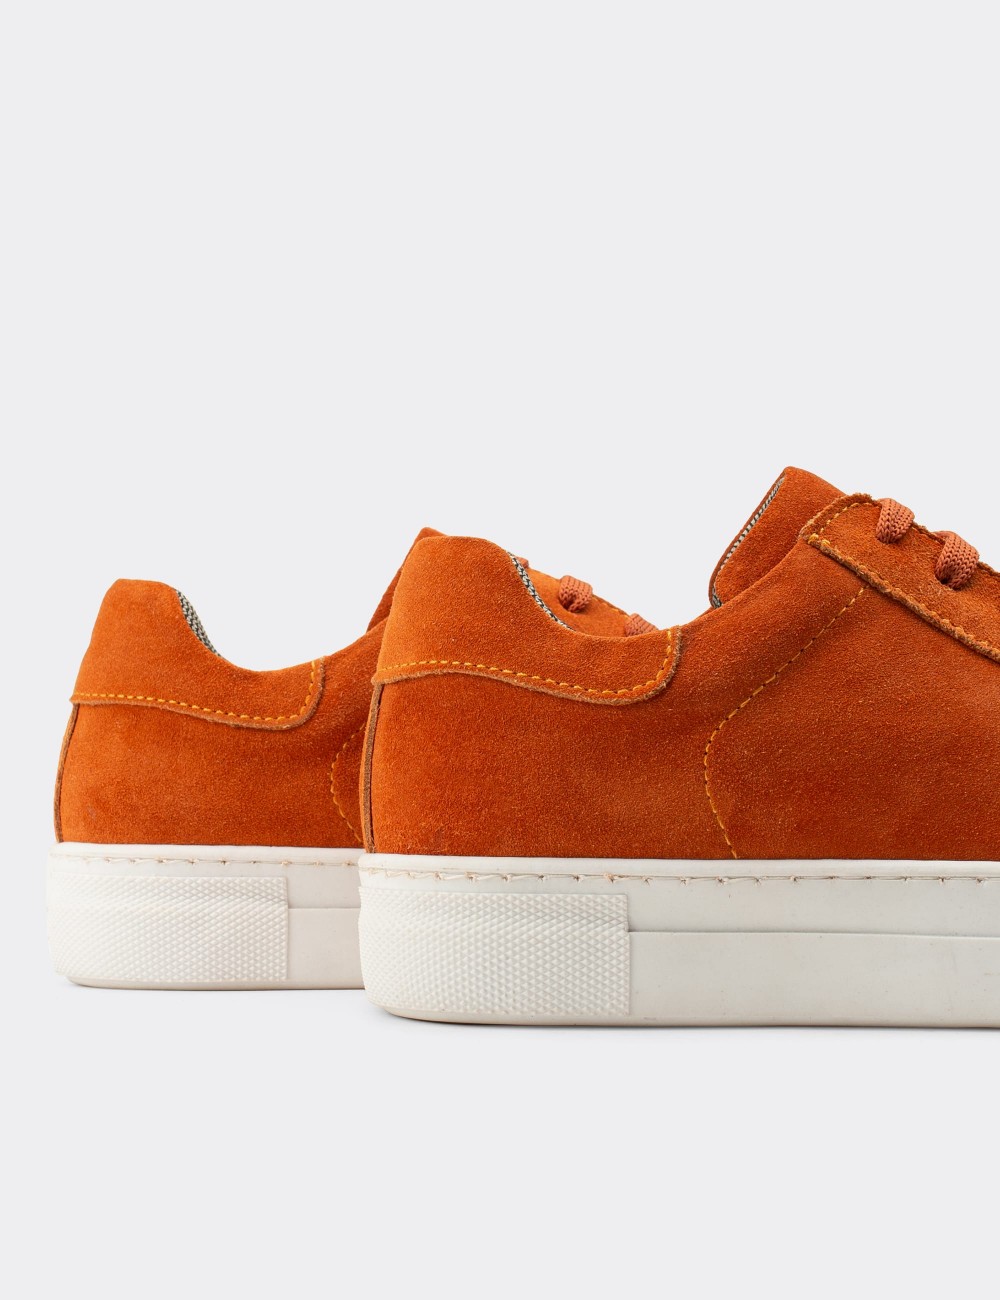 Orange Suede Leather Sneakers - Z1681ZTRCC01